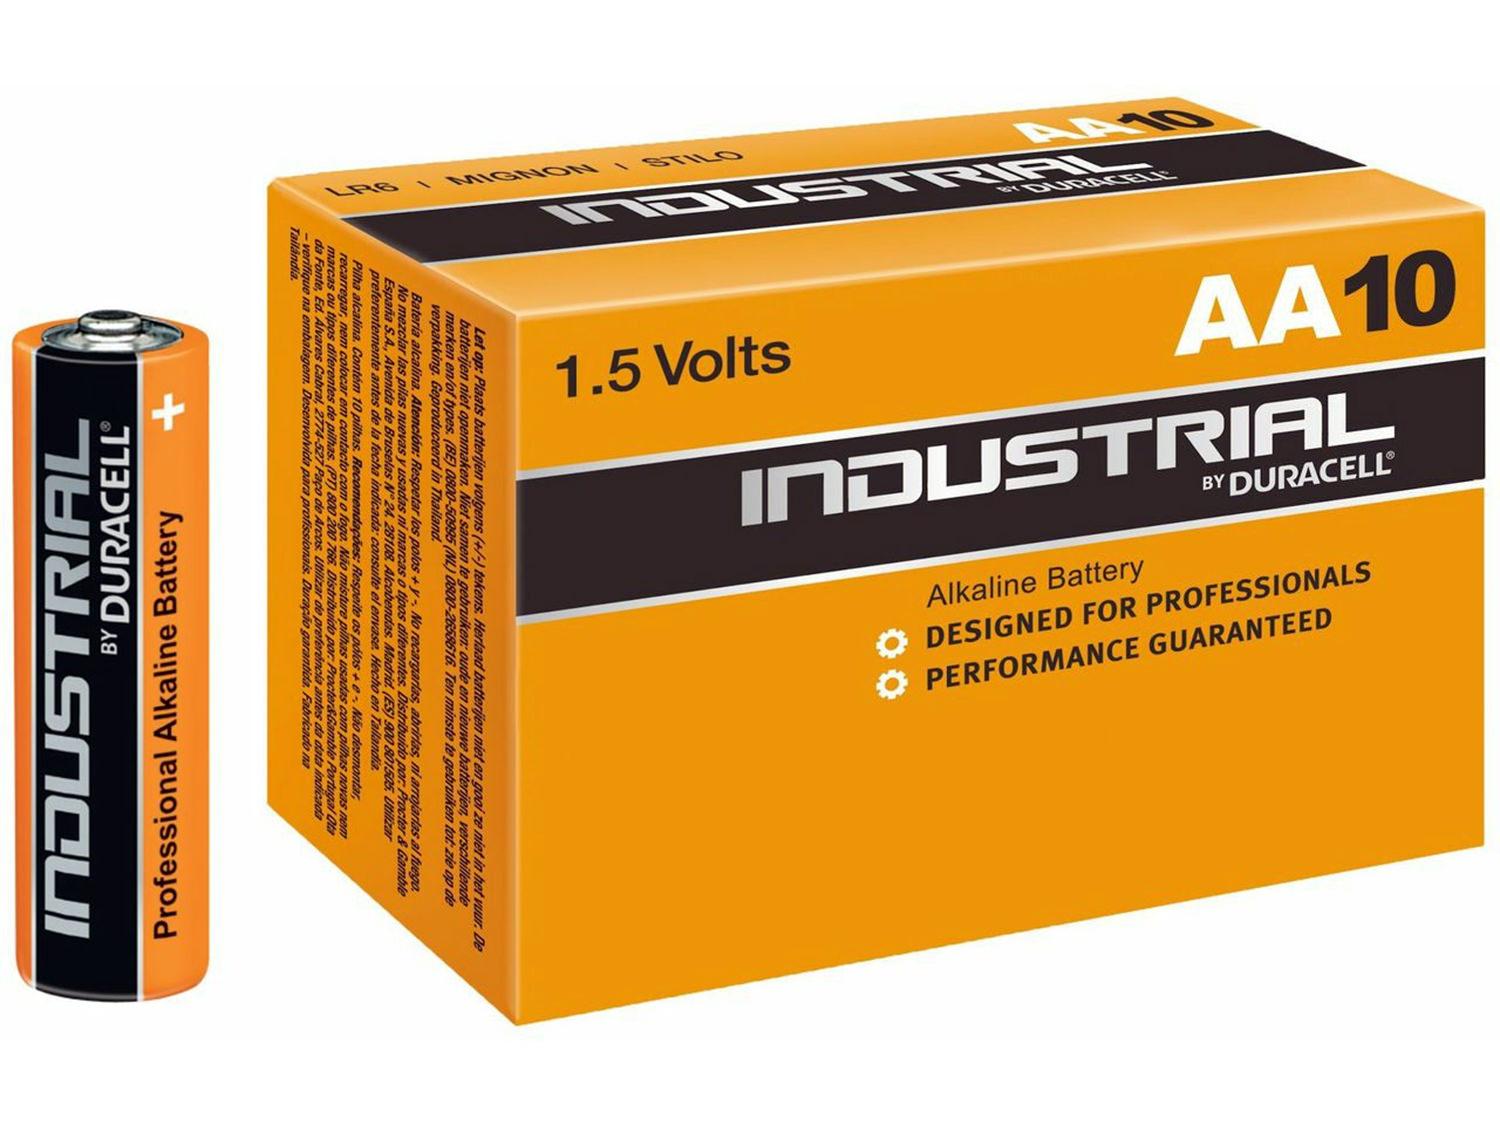 Duracell Industrial Alkaline AA Batteries 10 Pack